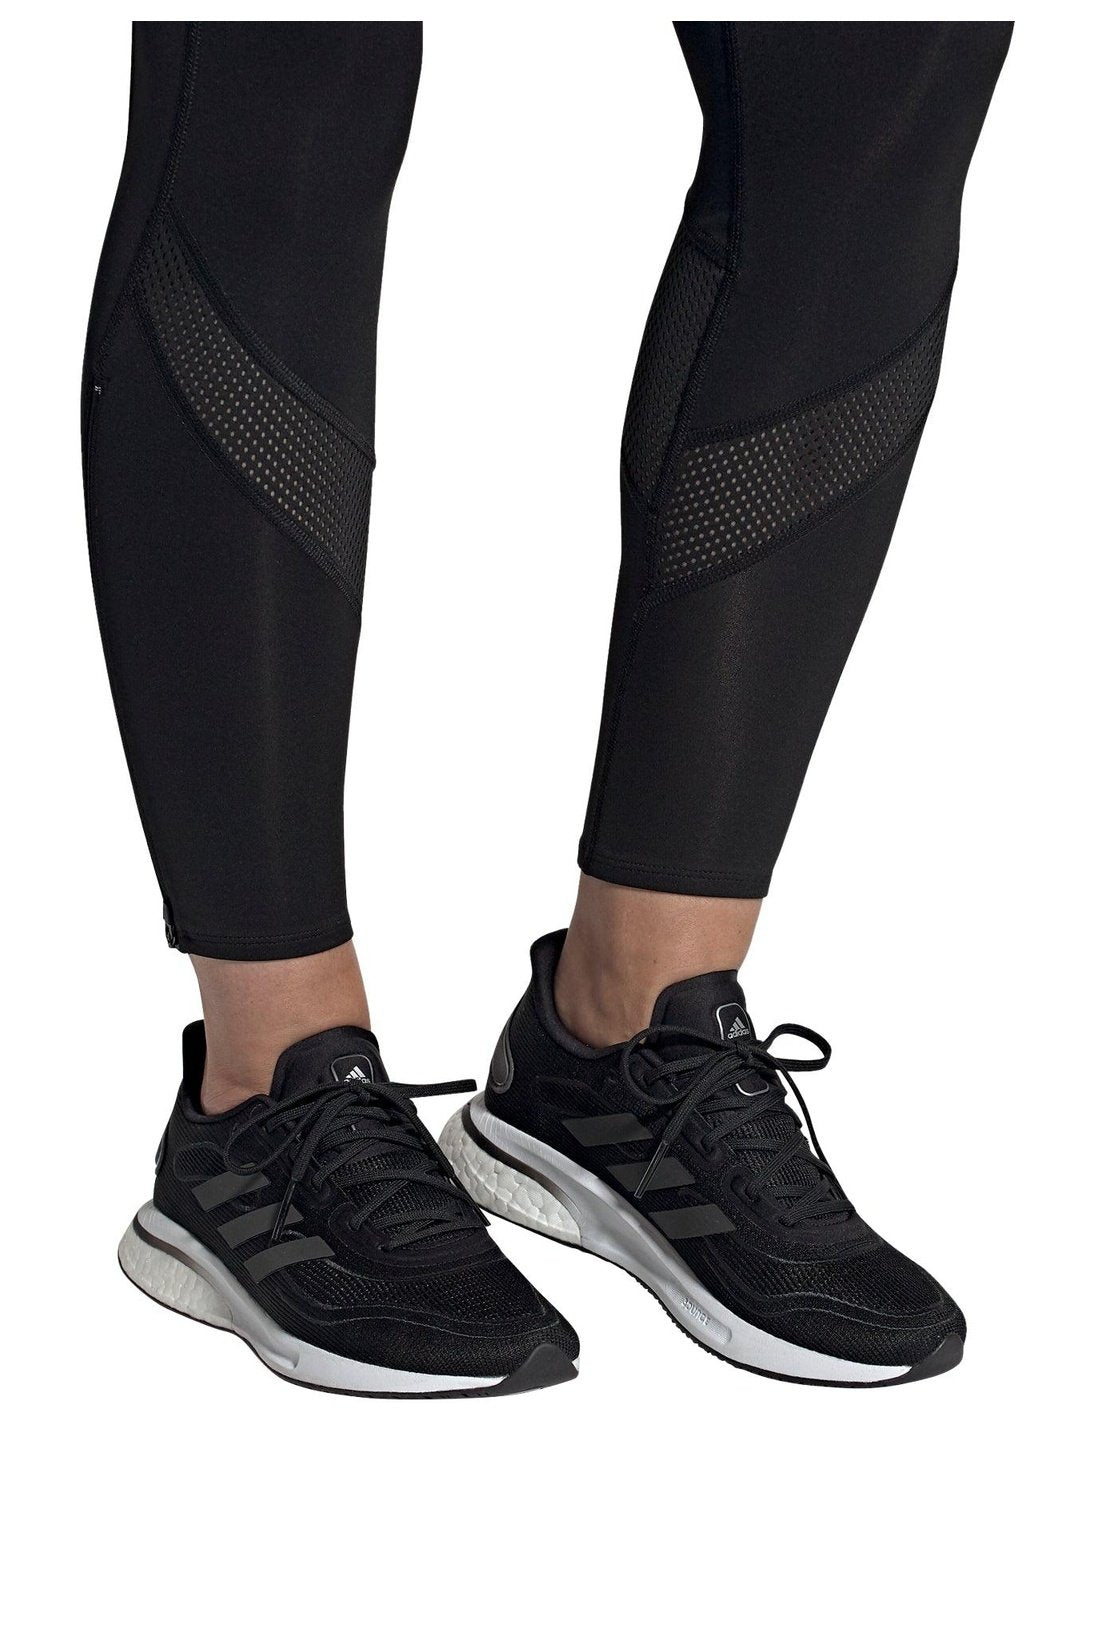 ADIDAS - נעלי ספורט לנשים SUPERNOVA בצבע שחור - MASHBIR//365